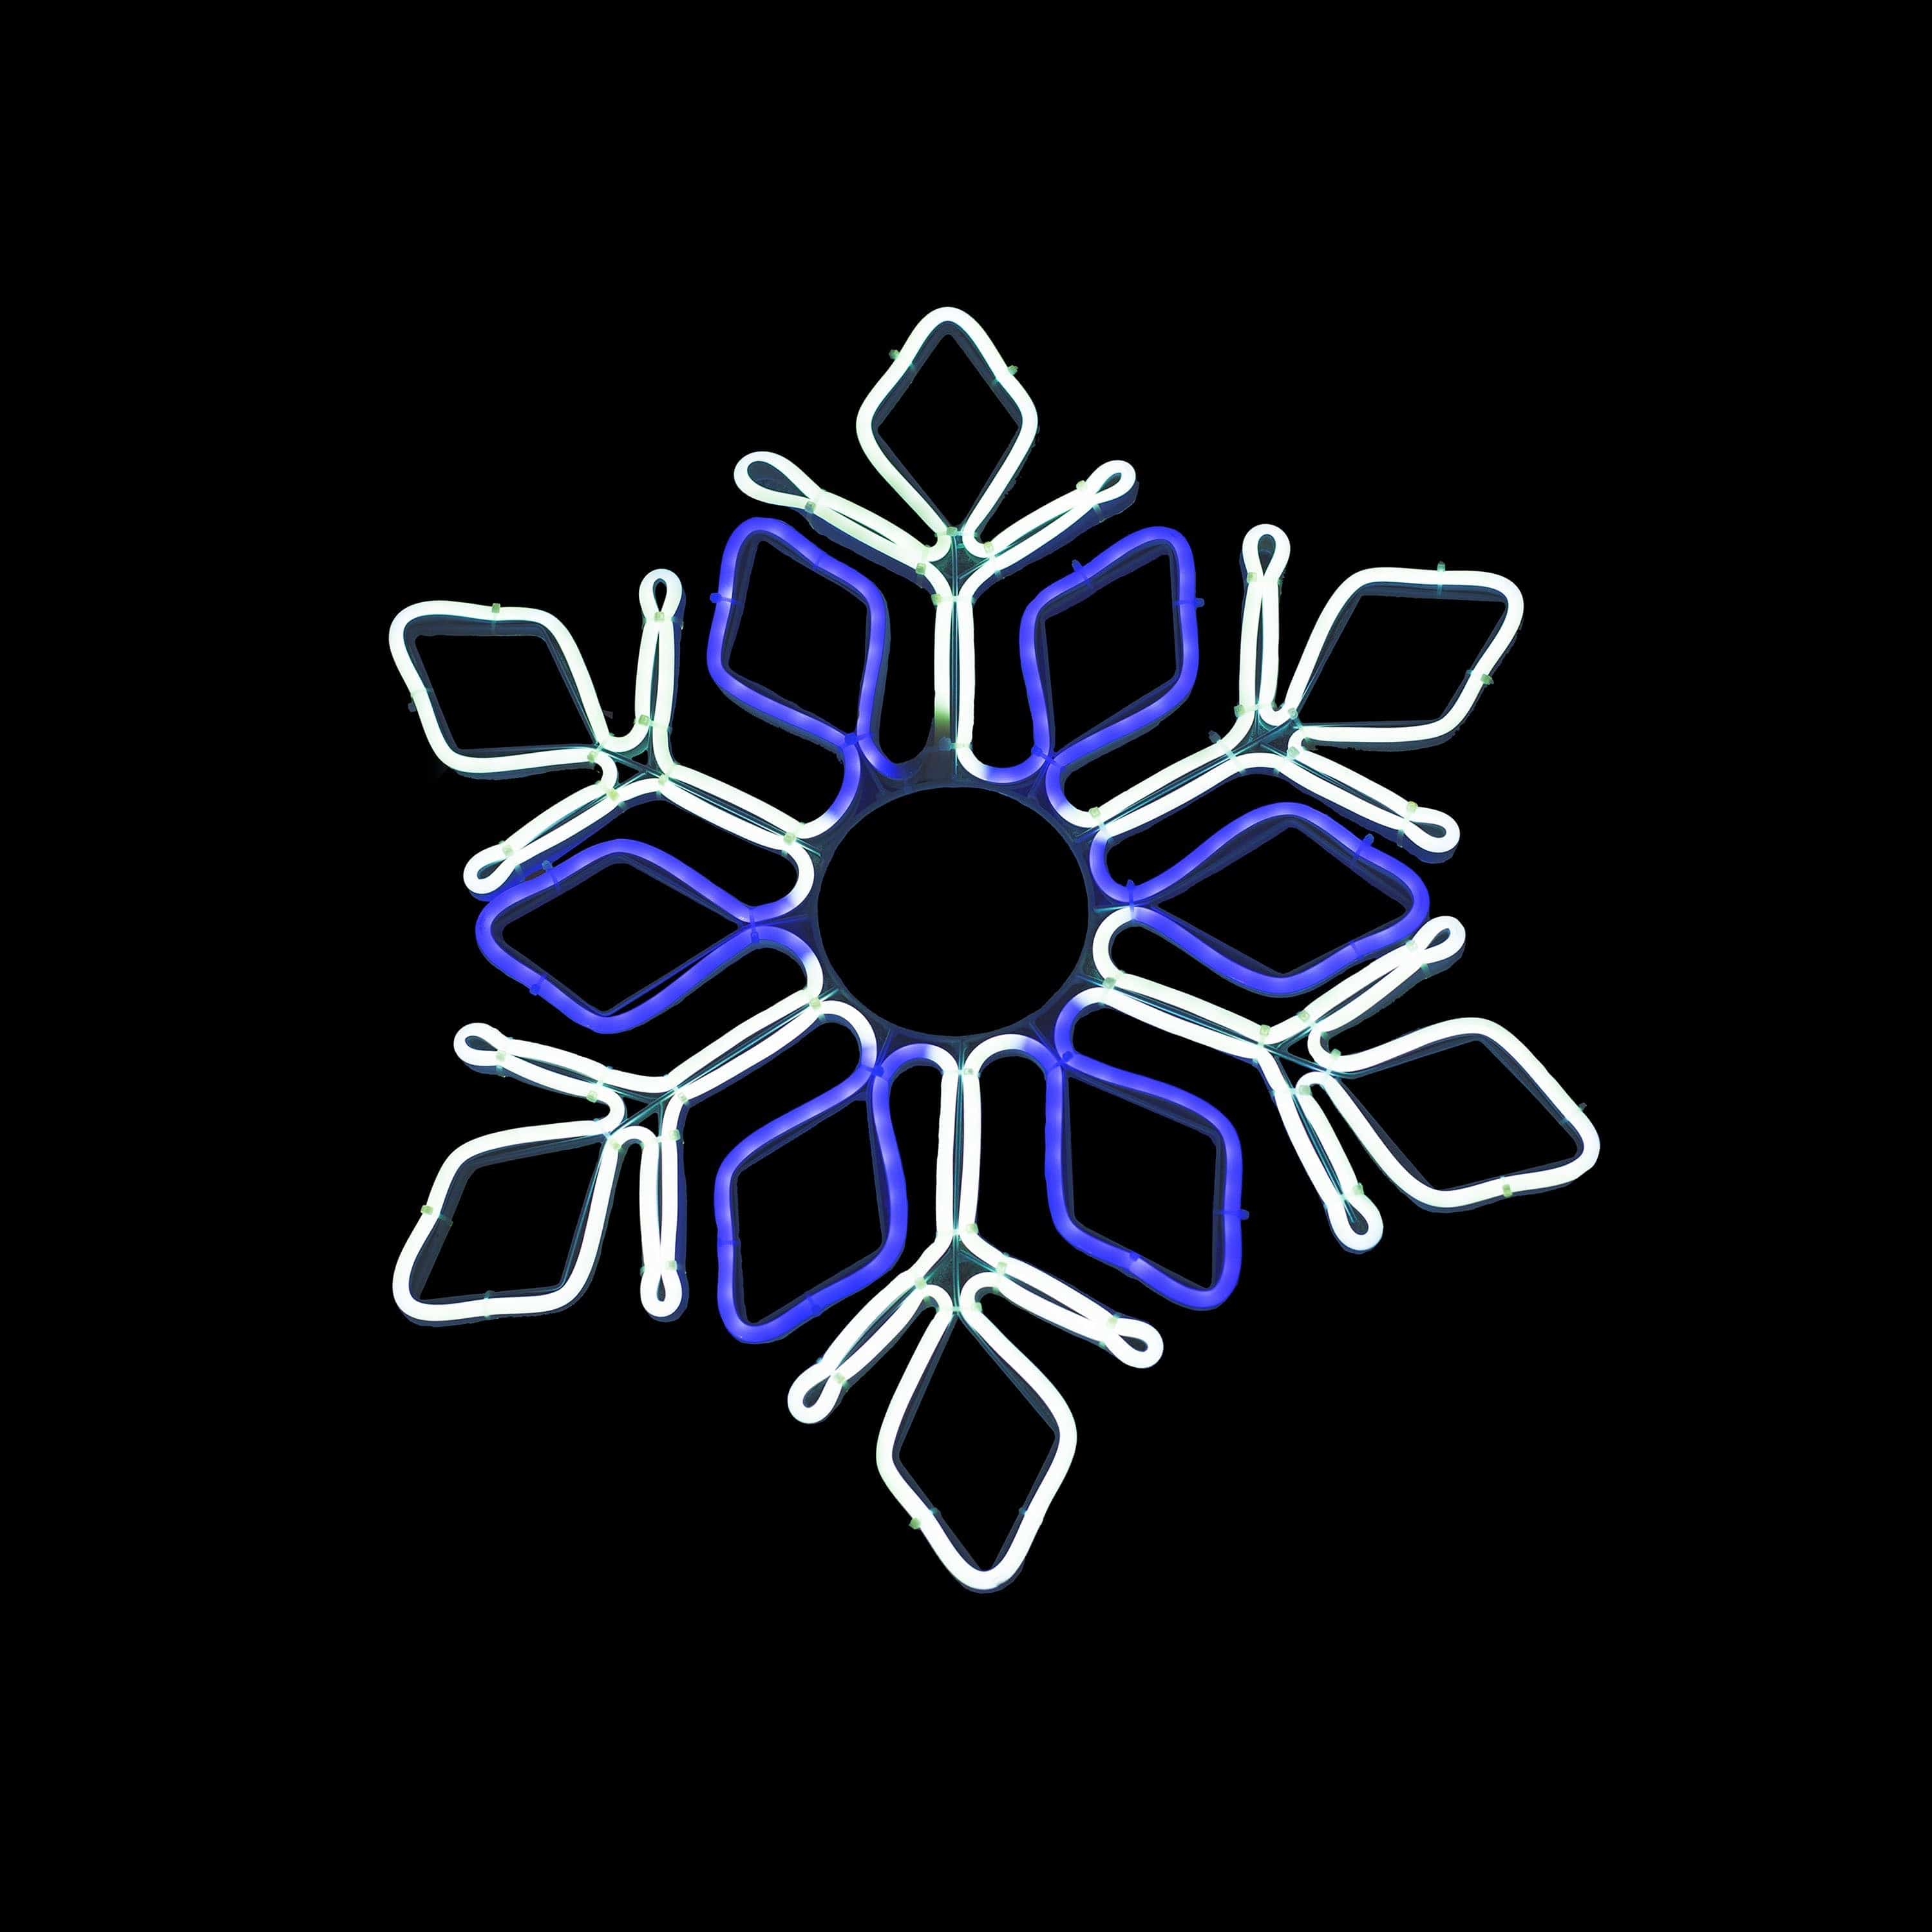 Promo Christmas Ceiling&Wall Decoration Neon Flex Light Snowflakes - Blue/White LL001040-P